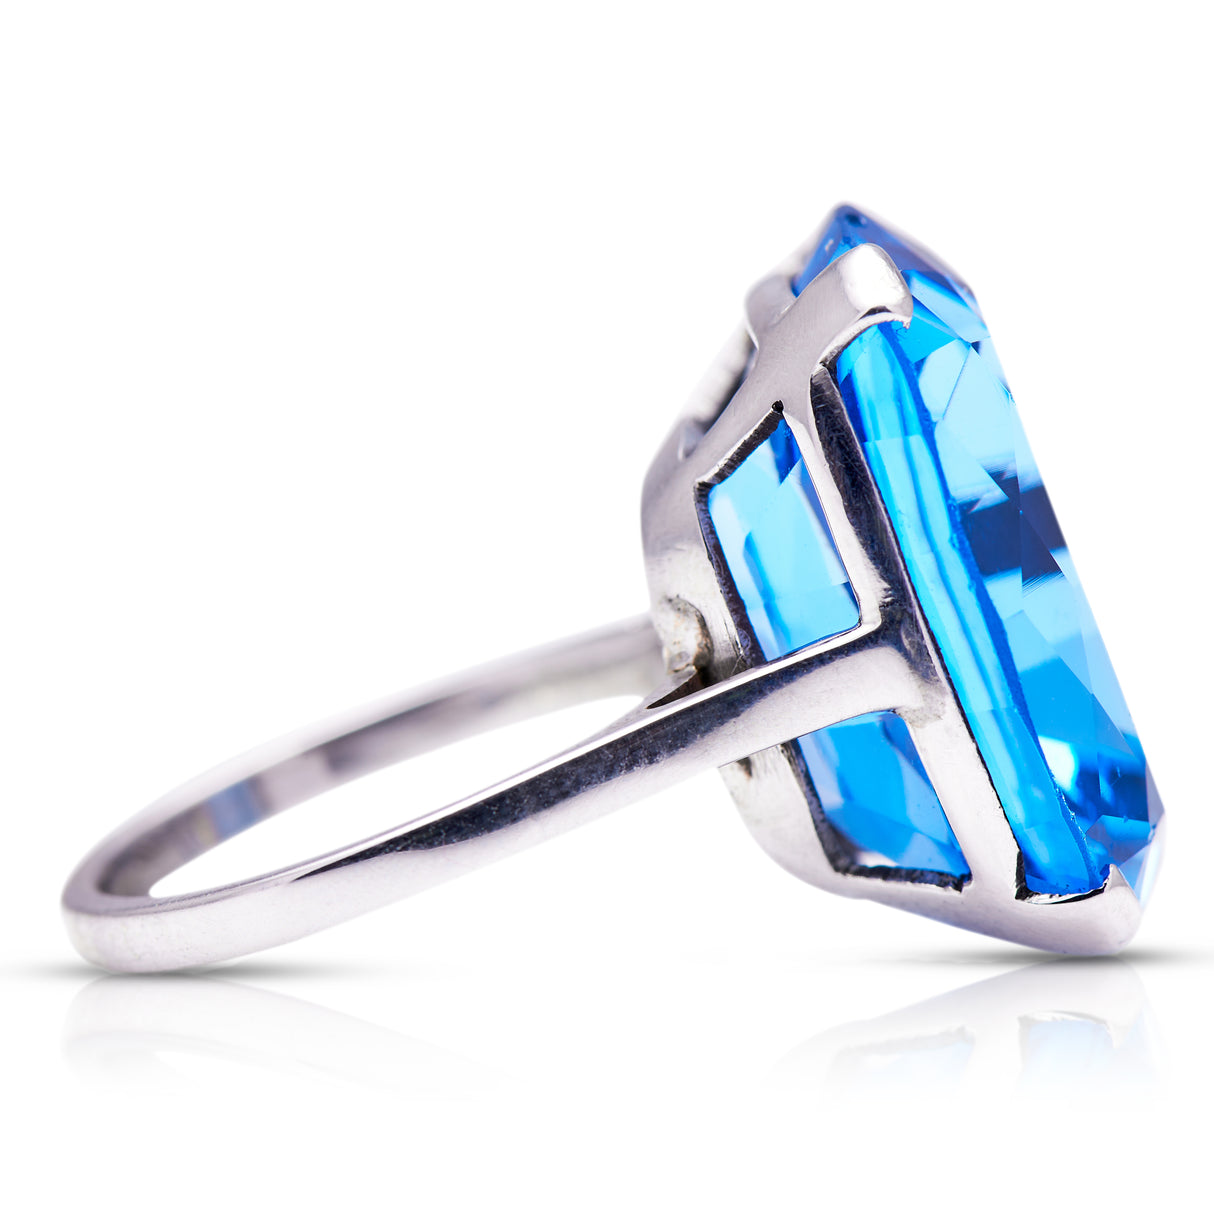 Antique, 1920s azure-blue stone ring